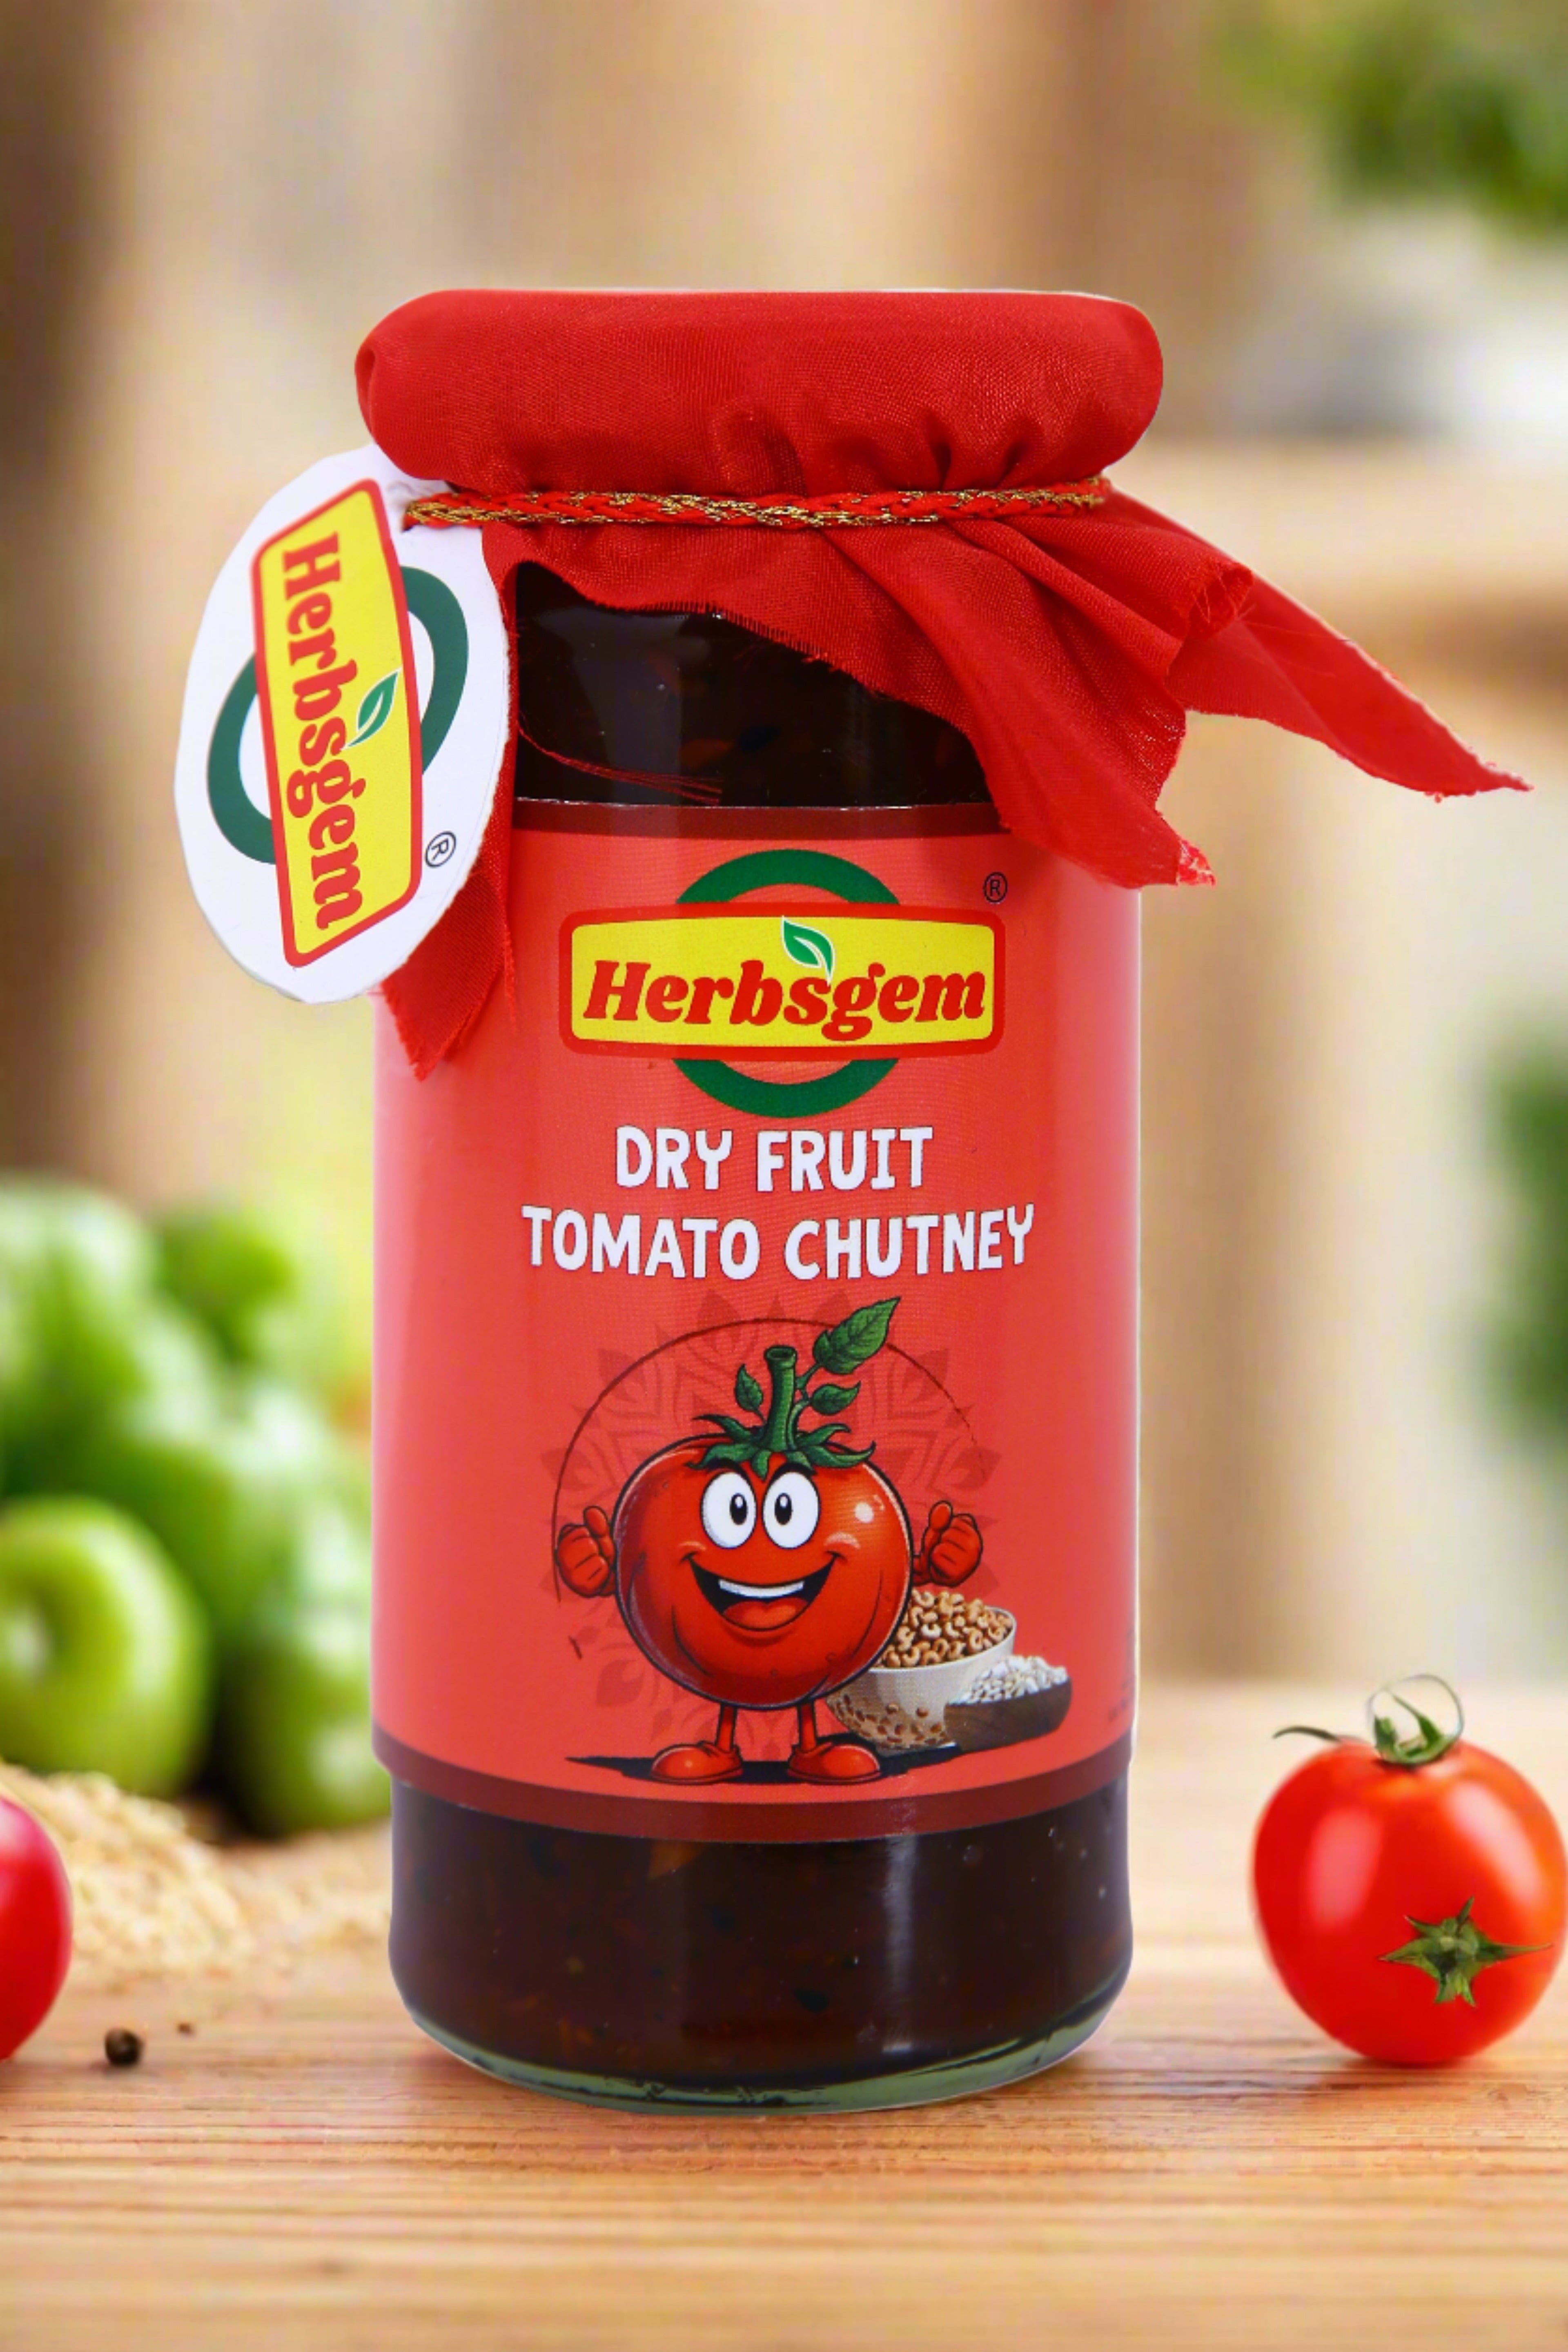 Herbsgem's Dry Fruit Tomato Chutney